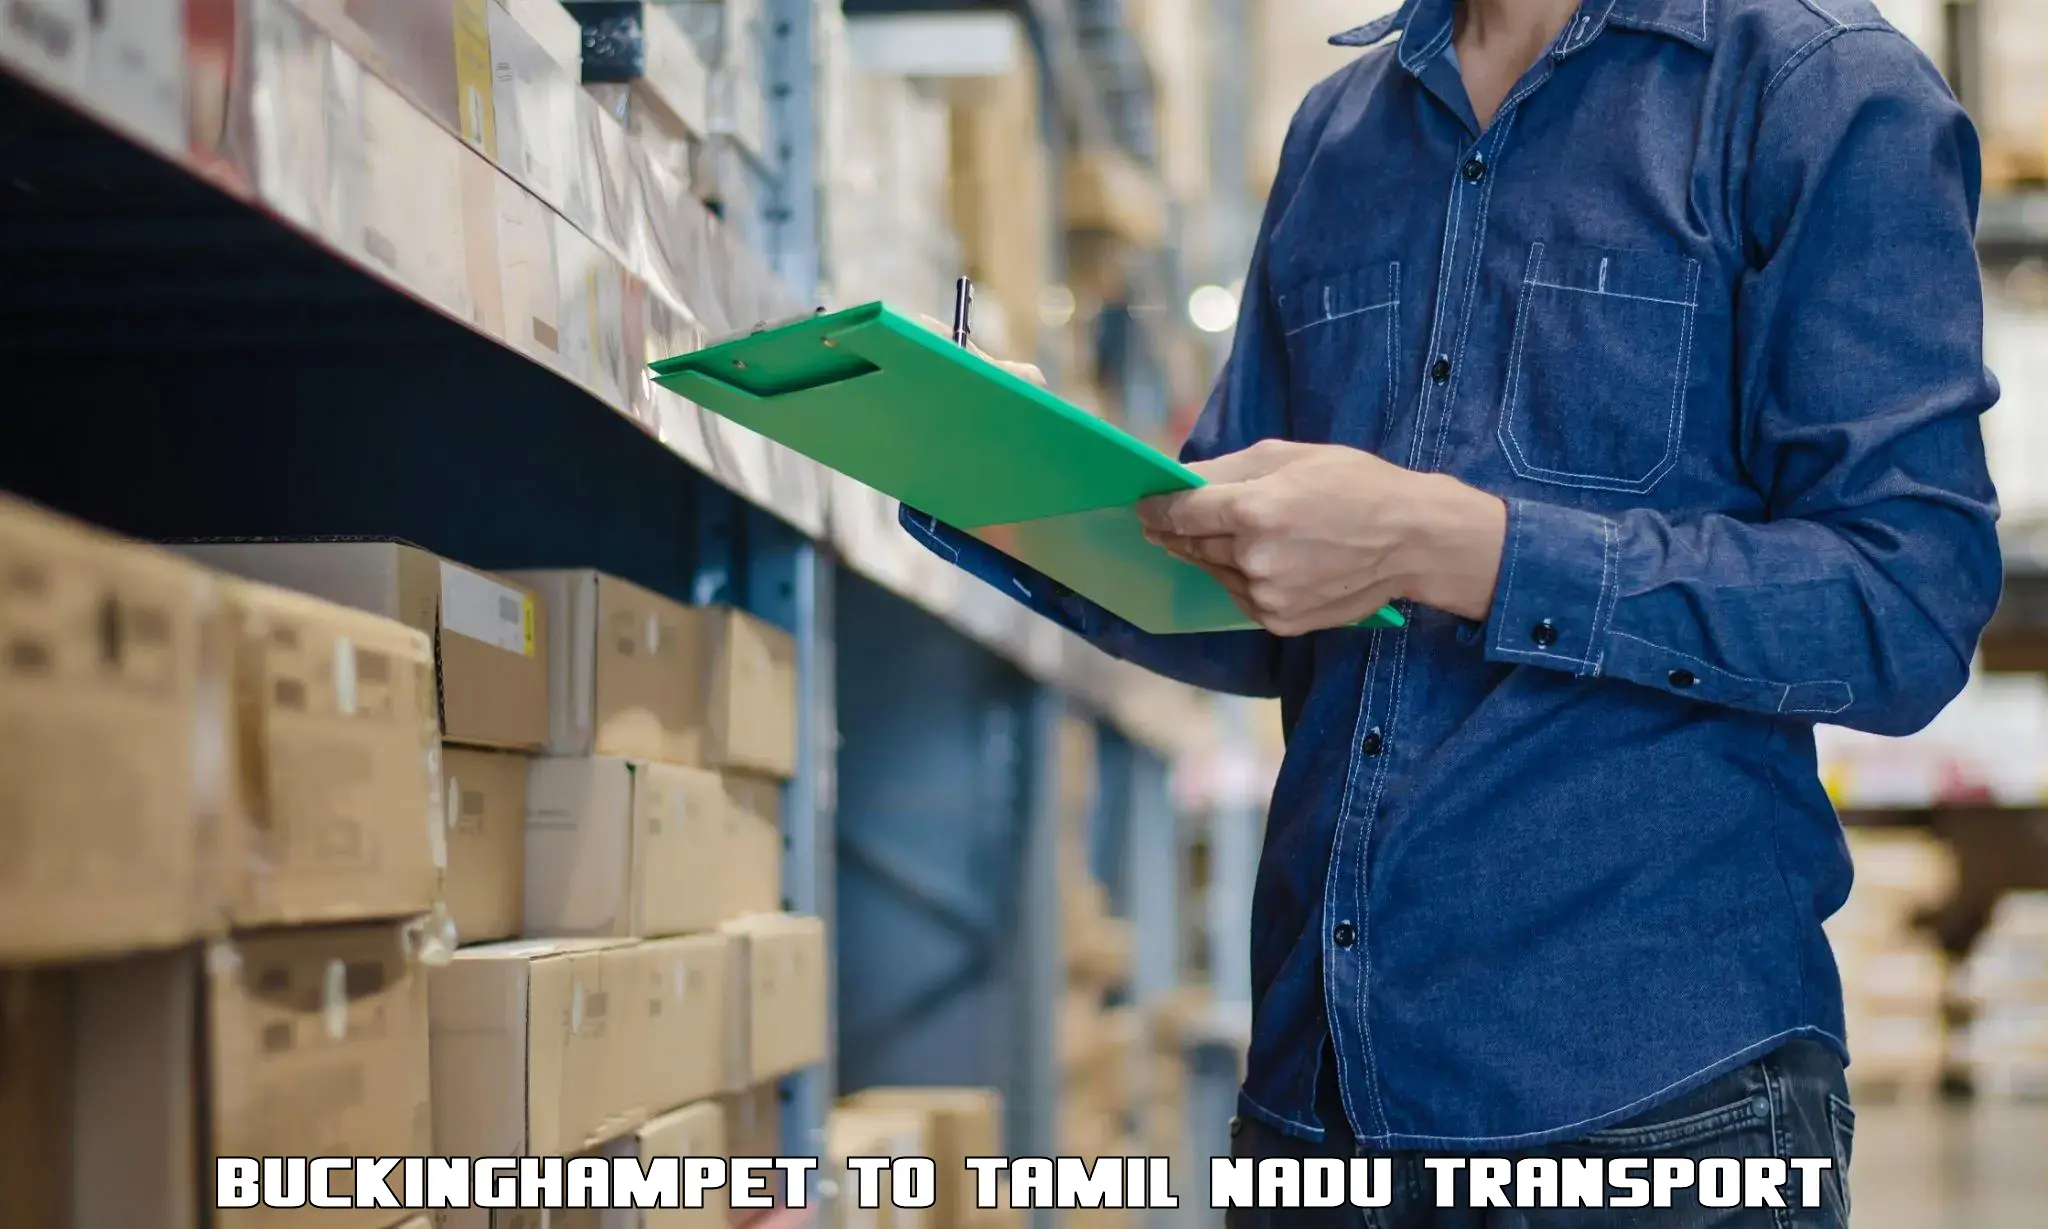 Daily transport service Buckinghampet to Tamil Nadu